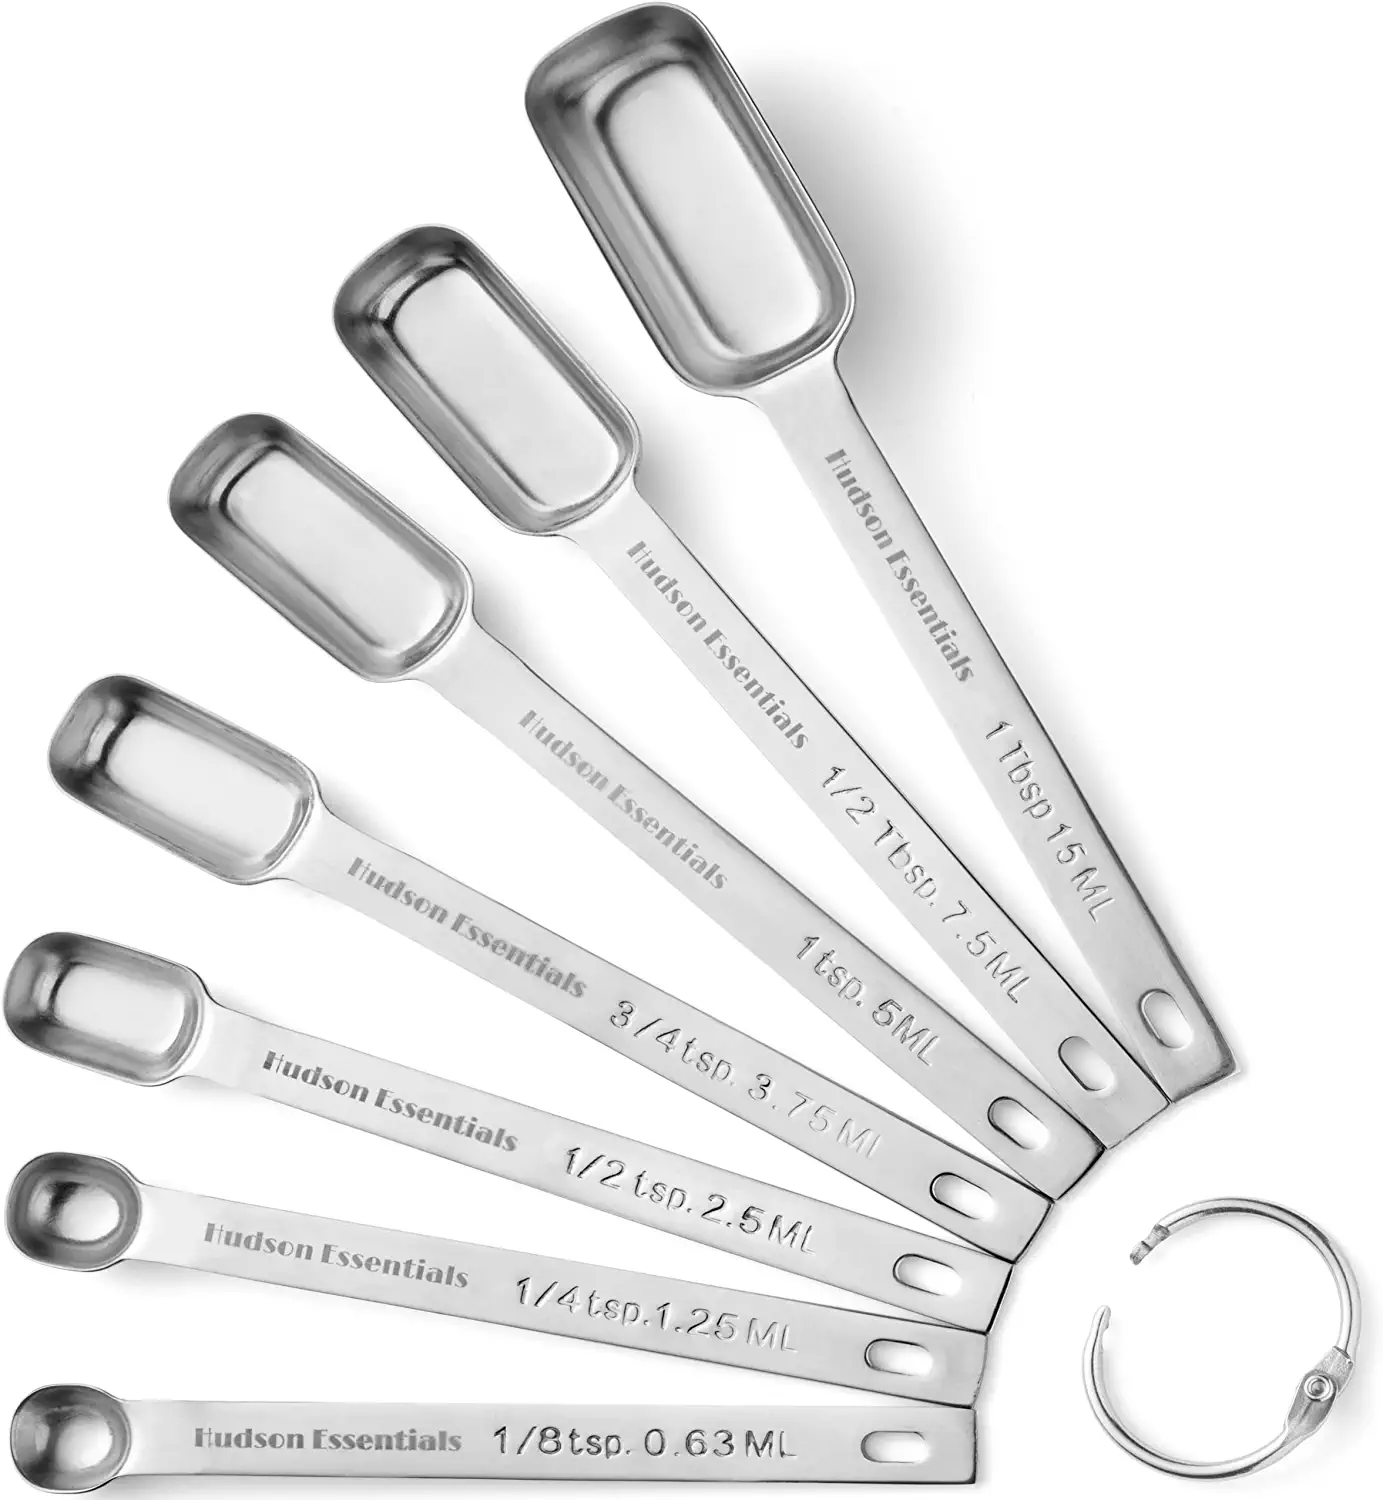 OXO Good Grips Stainless Steel Measuring Spoon Set - Silver/Black, 4 pc -  Kroger